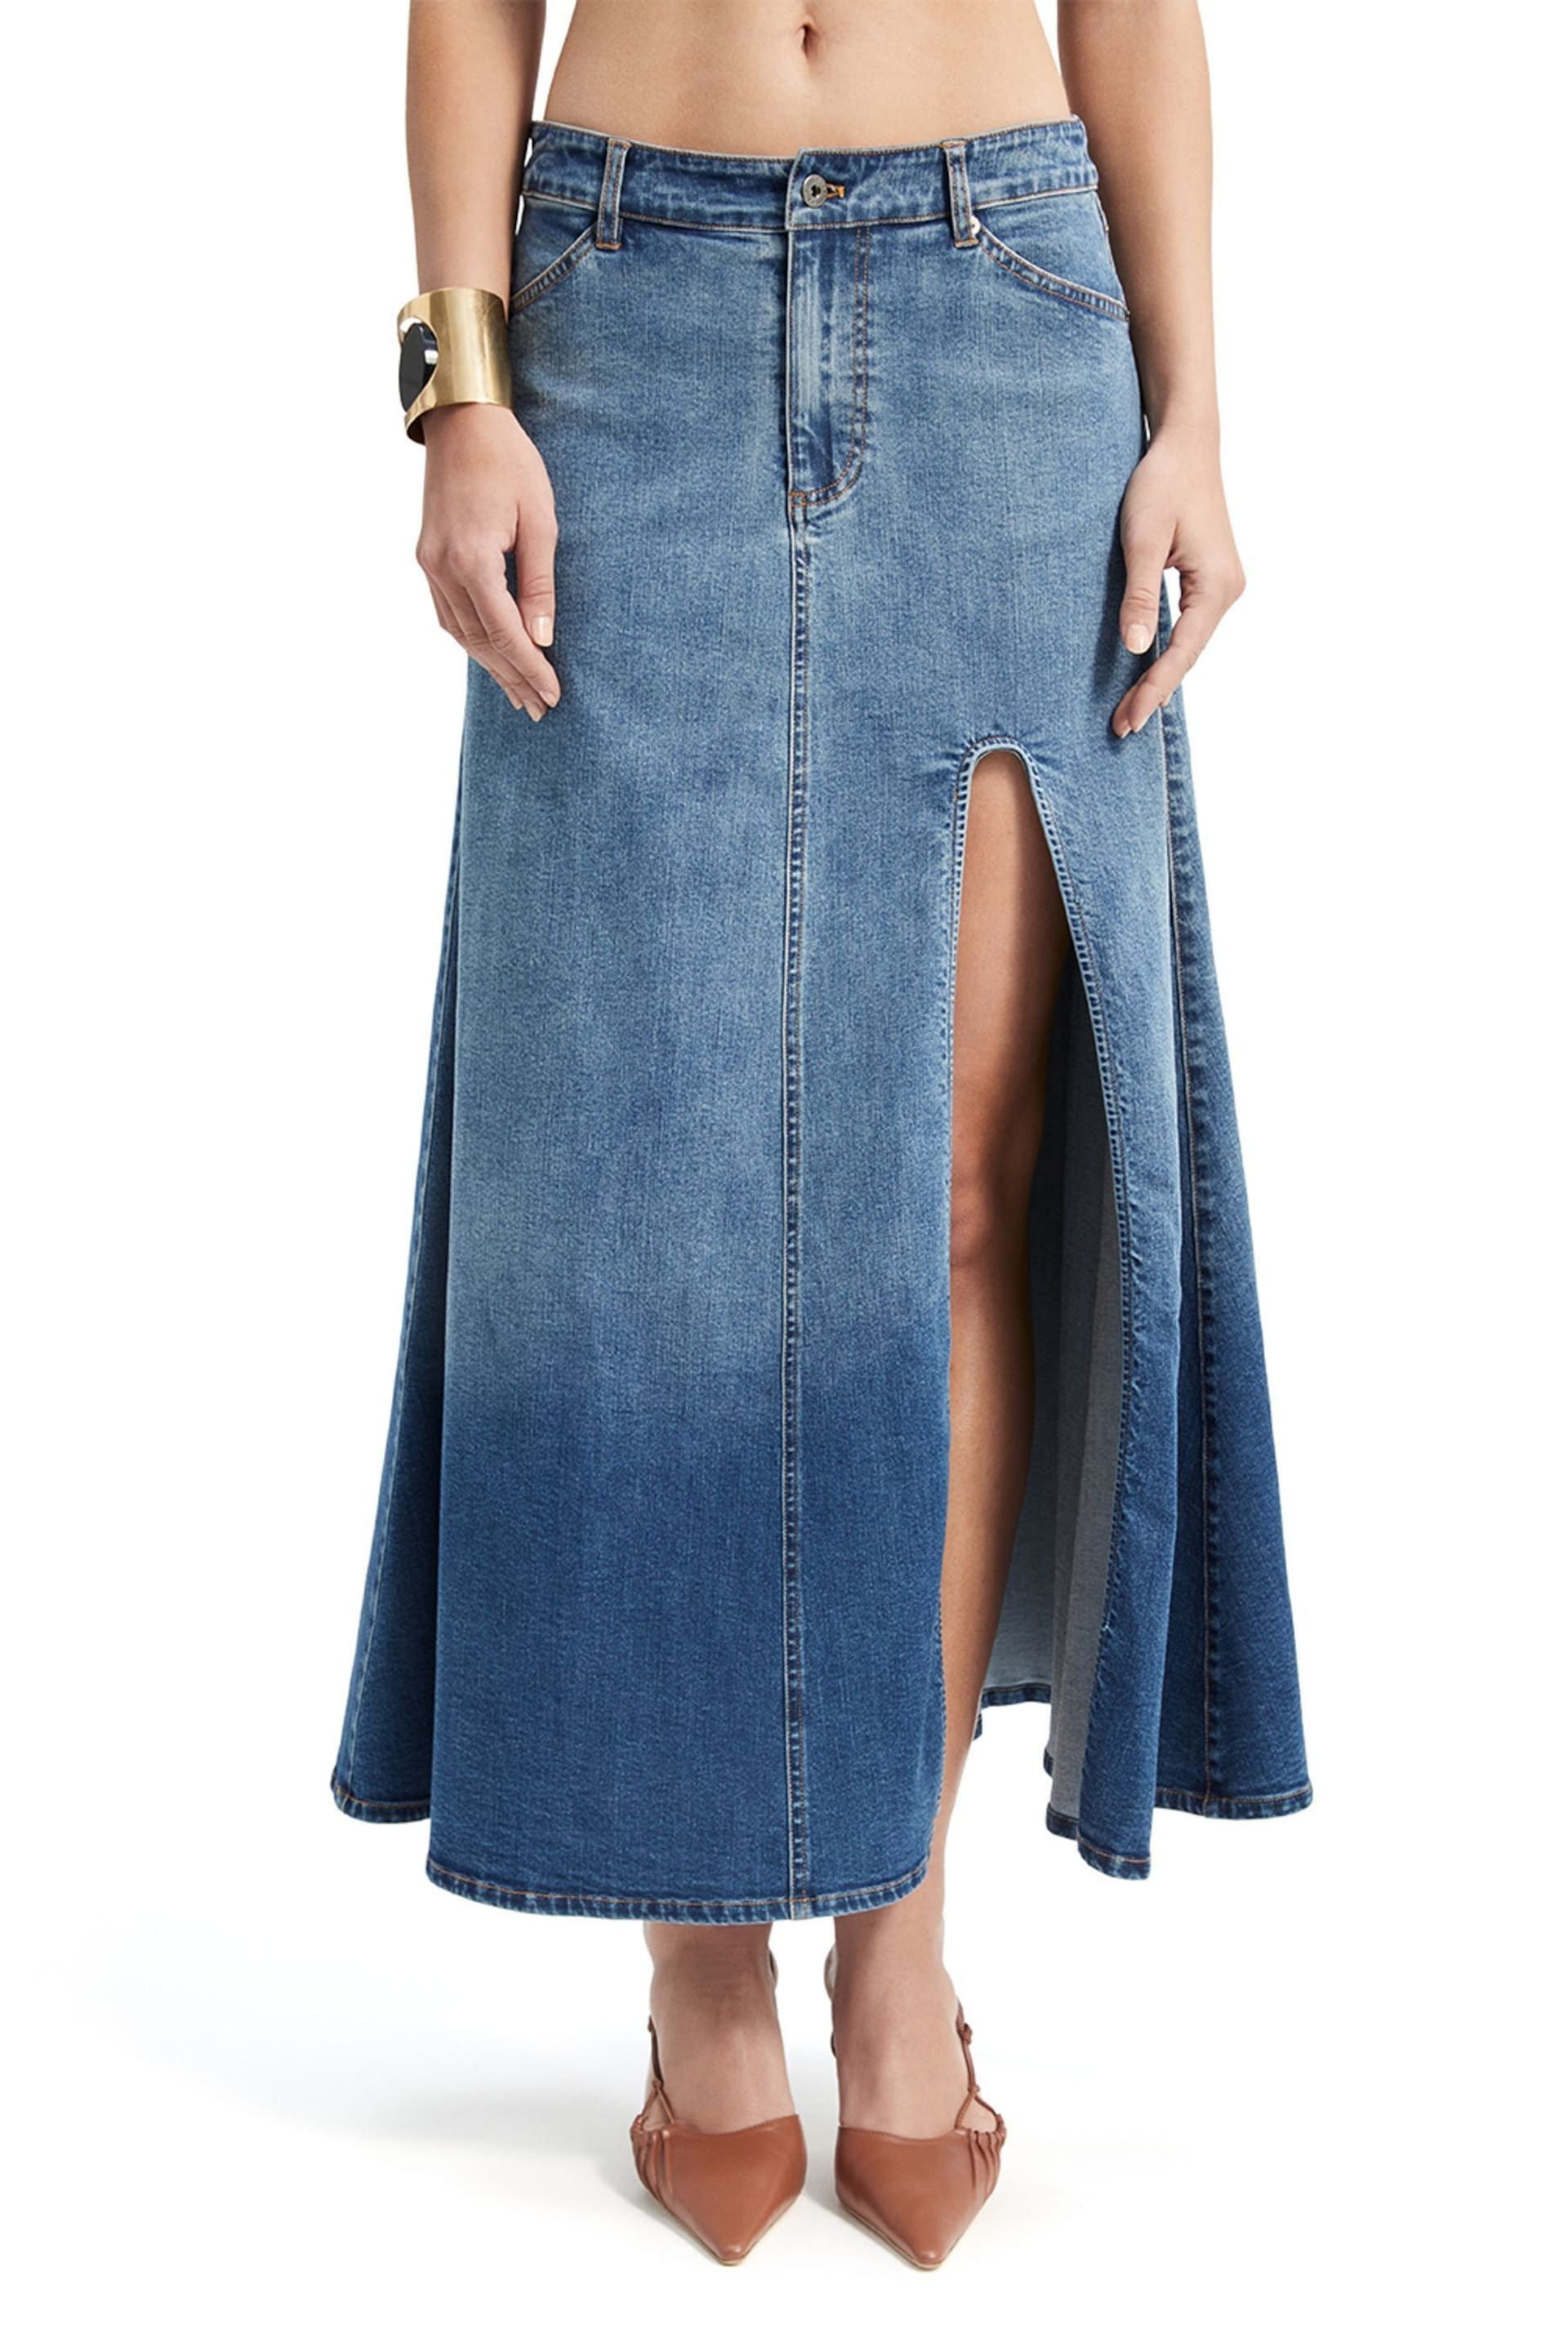 Bardot Blue Cynthia Mid Maxi Skirt - Image 4 of 6